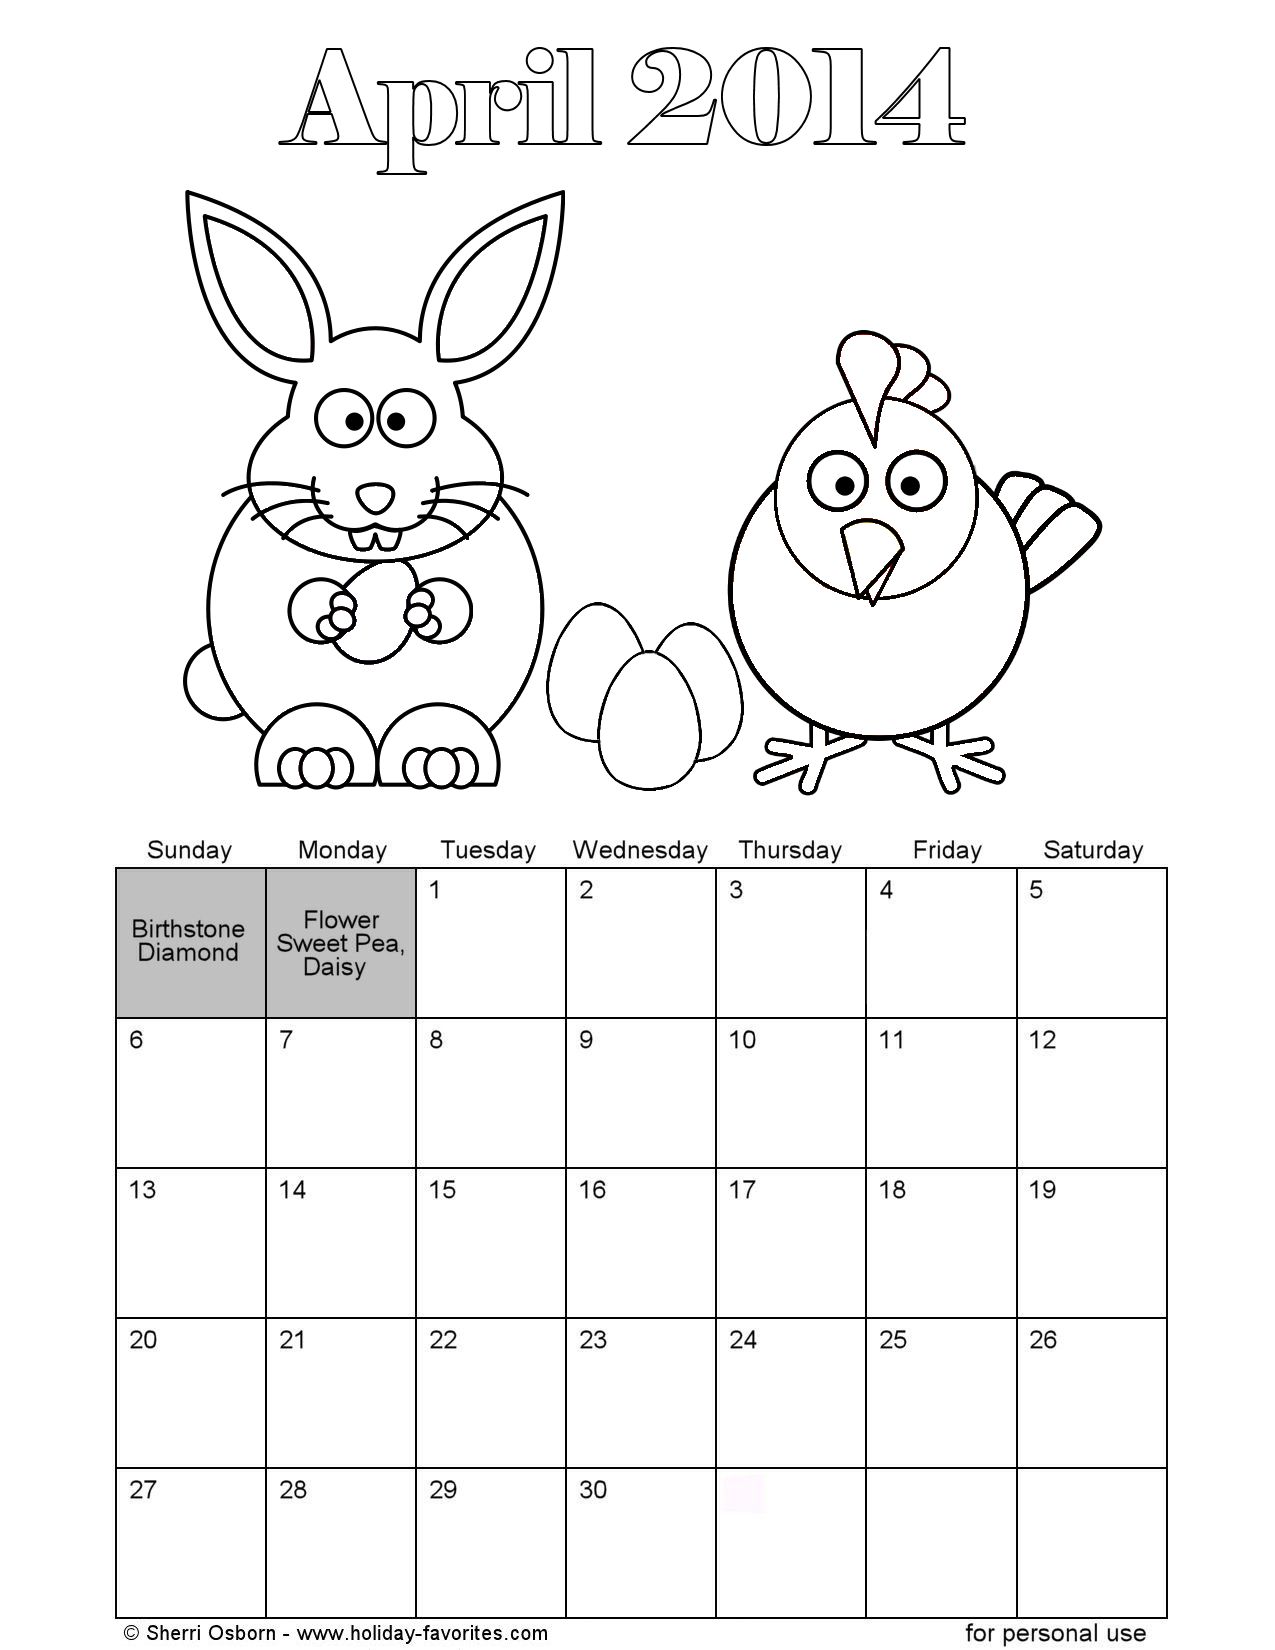 Printable April 2014 Calendars | Holiday Favorites